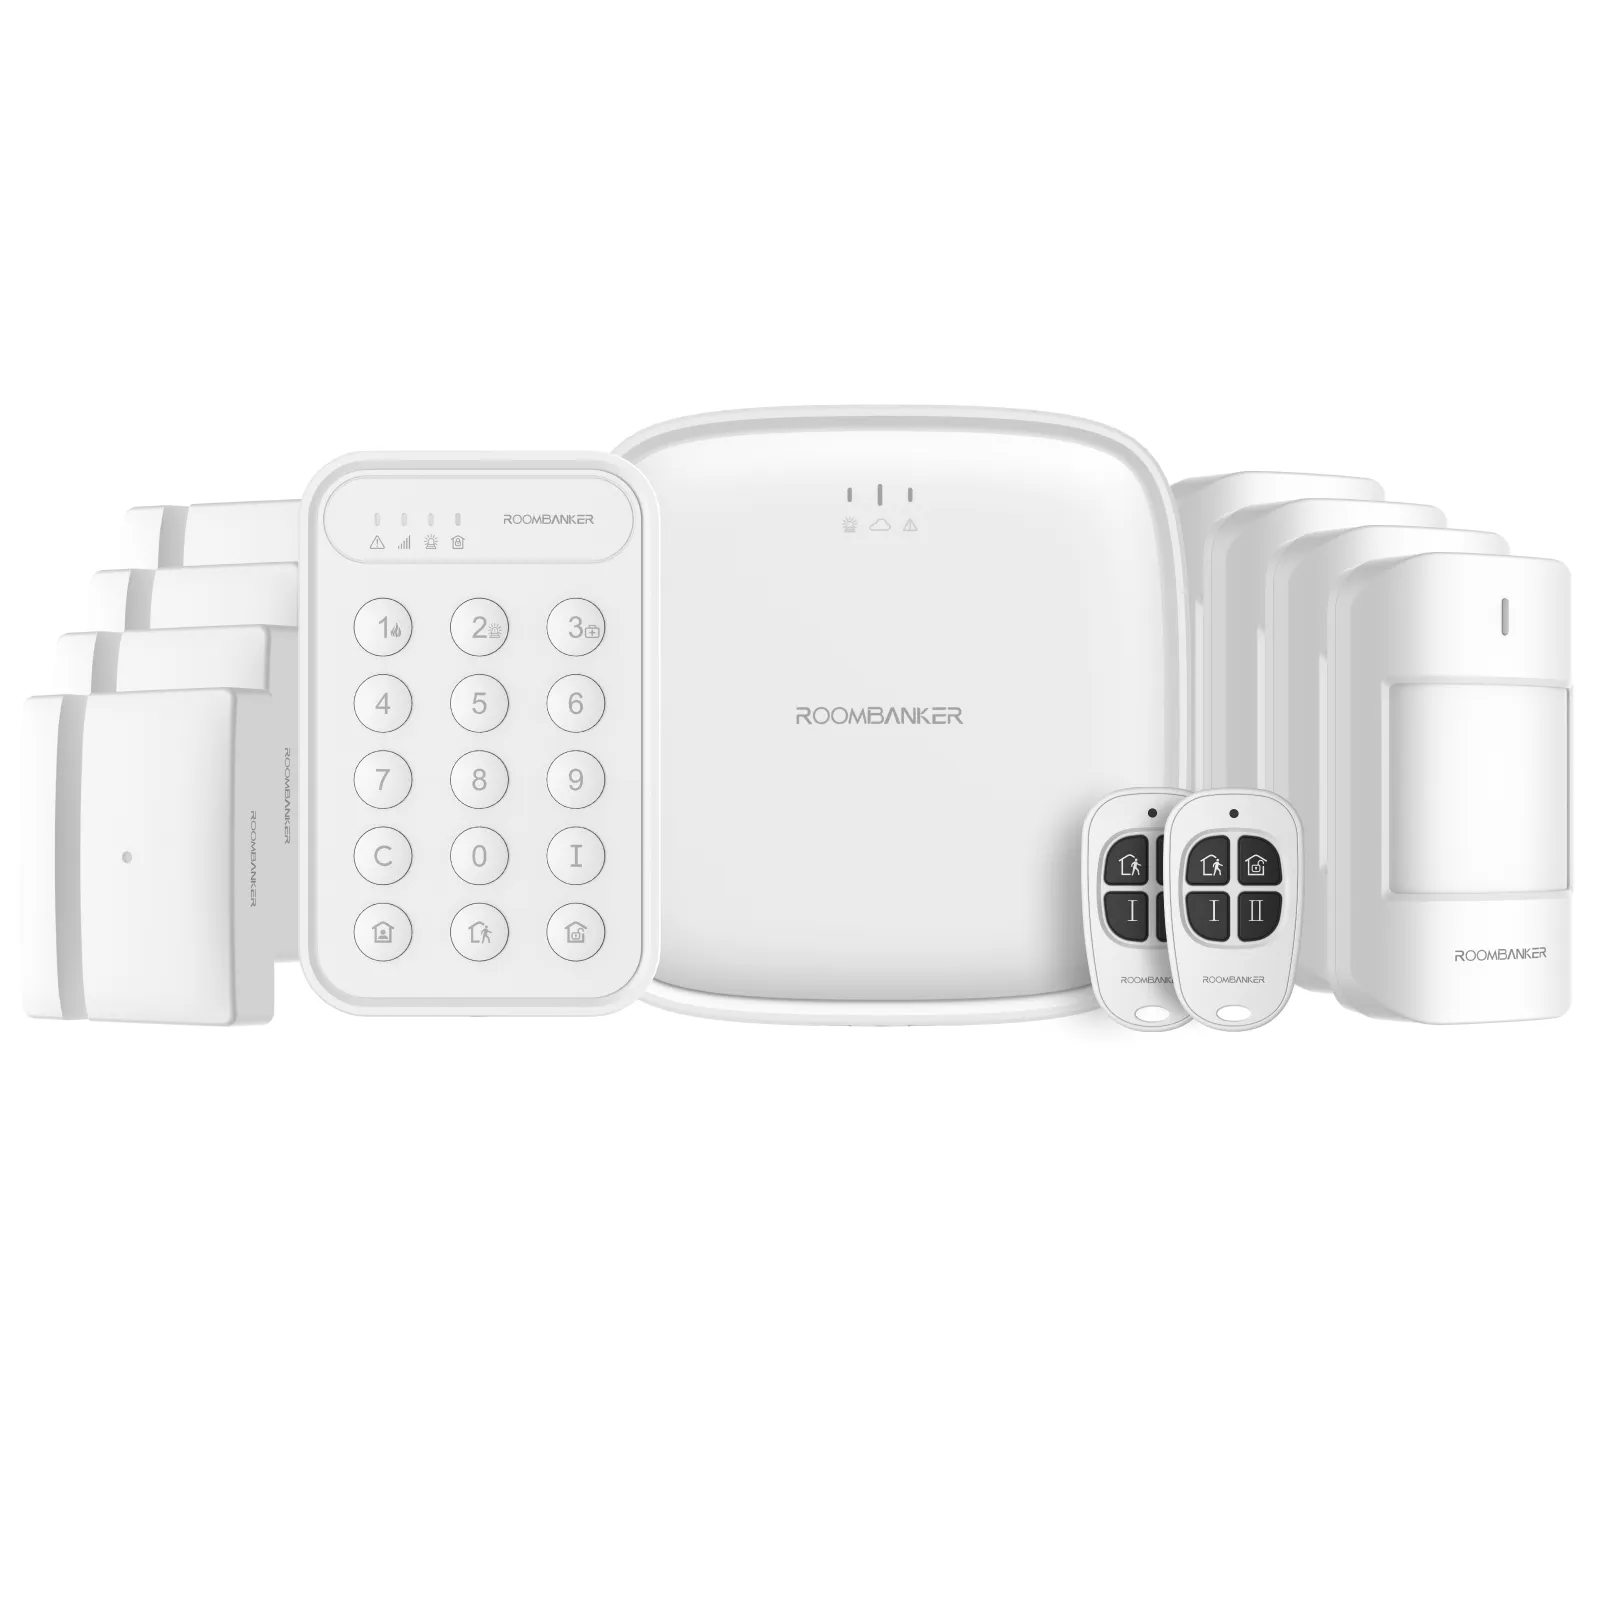 Roombanker Smart WiFi 4G Security Alarm System with Door Motion Sensor Home Alarm System